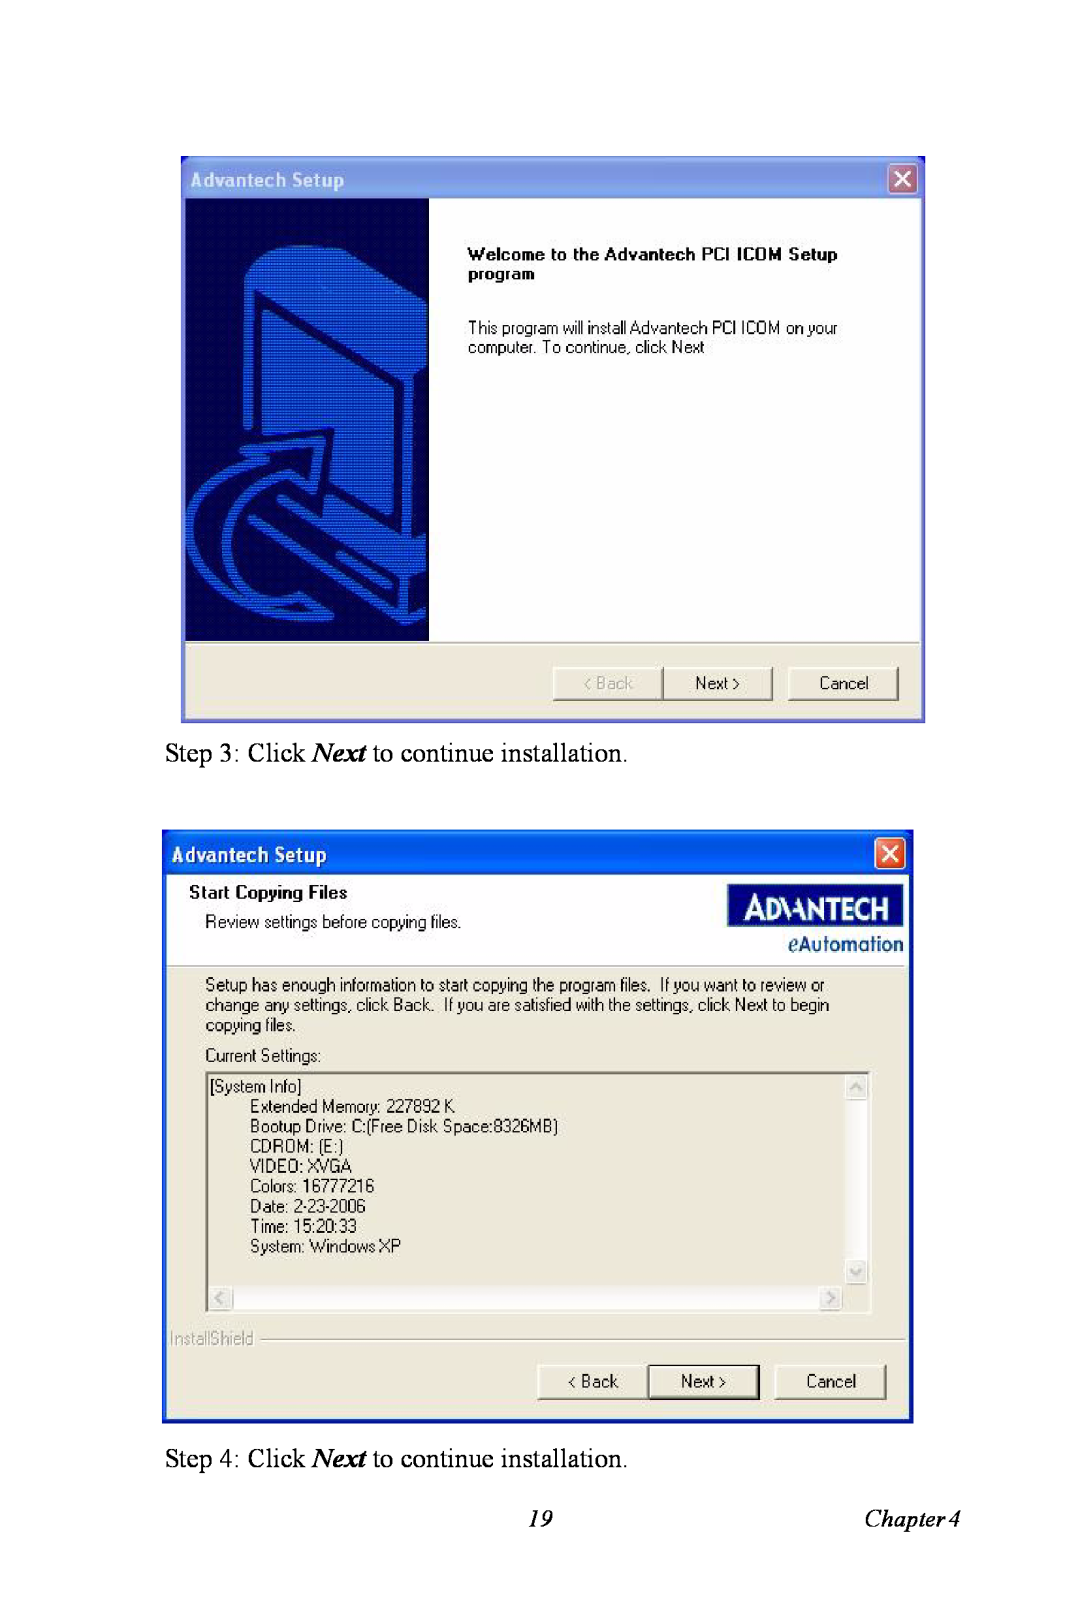 Intel TPC-1070 user manual Click Next to continue installation 